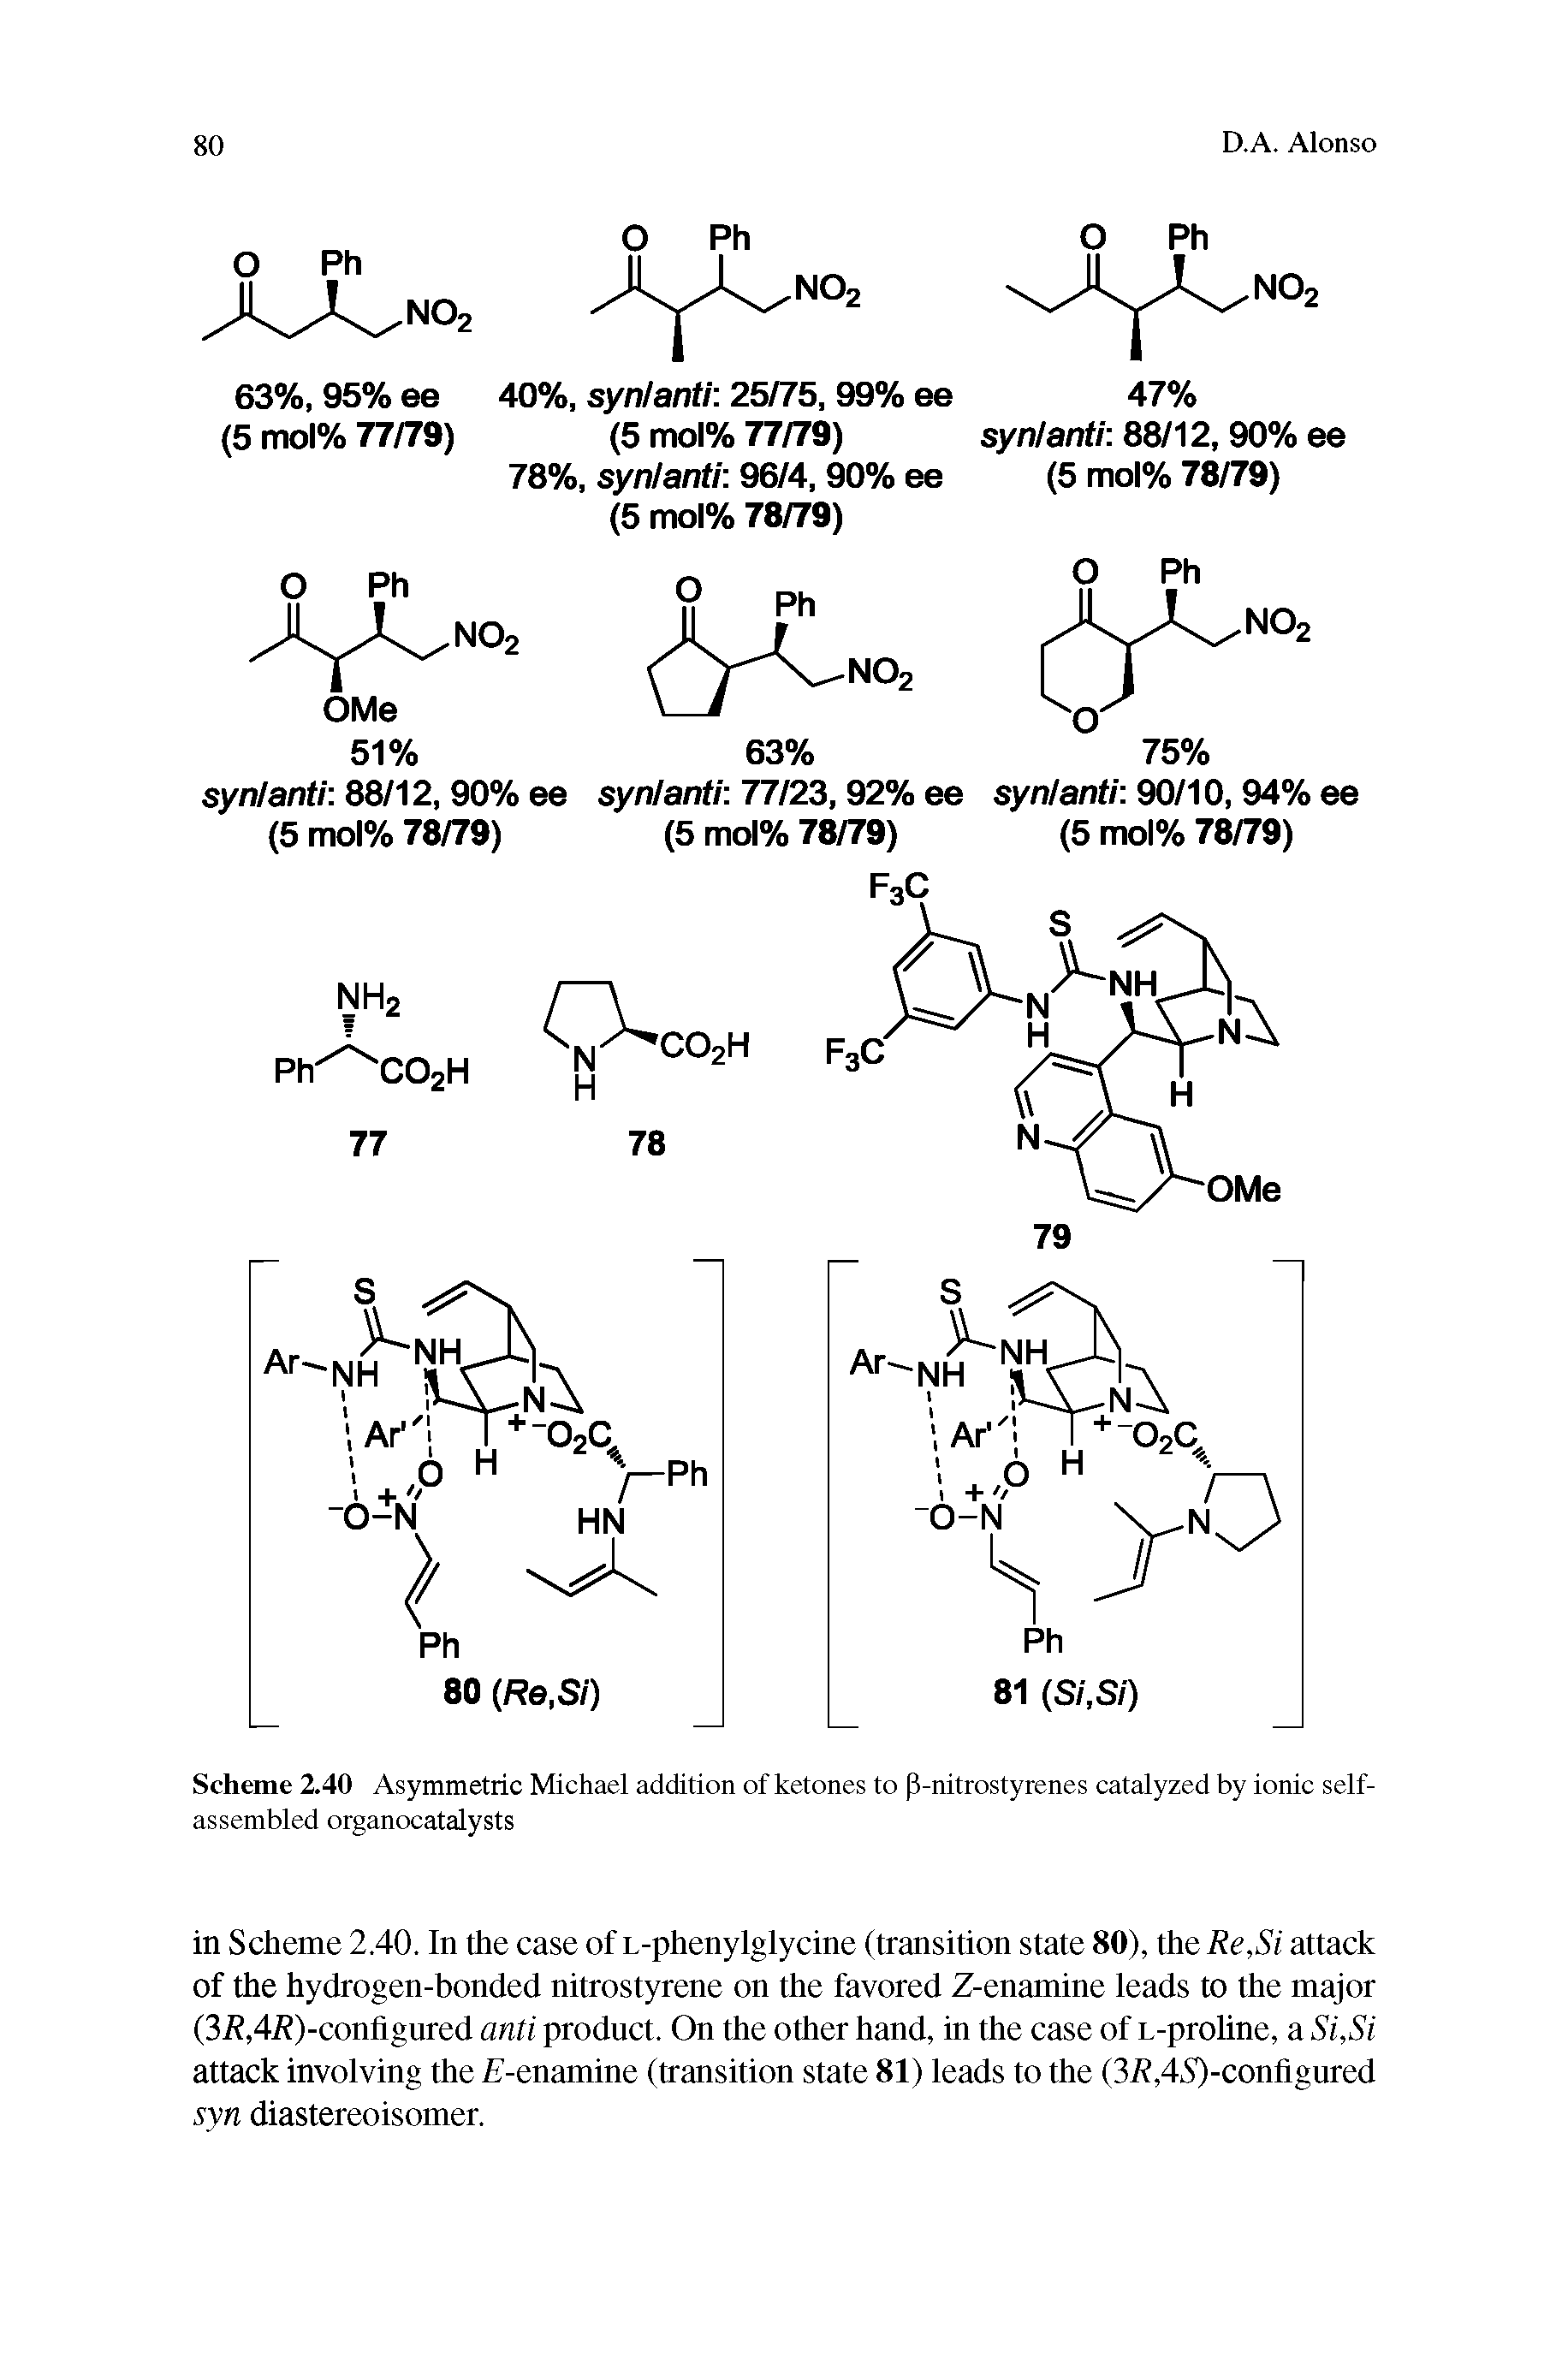 Scheme 2.40 Asymmetric Michael addition of ketones to p-nitrostyrenes catalyzed by ionic self-assembled organocatalysts...